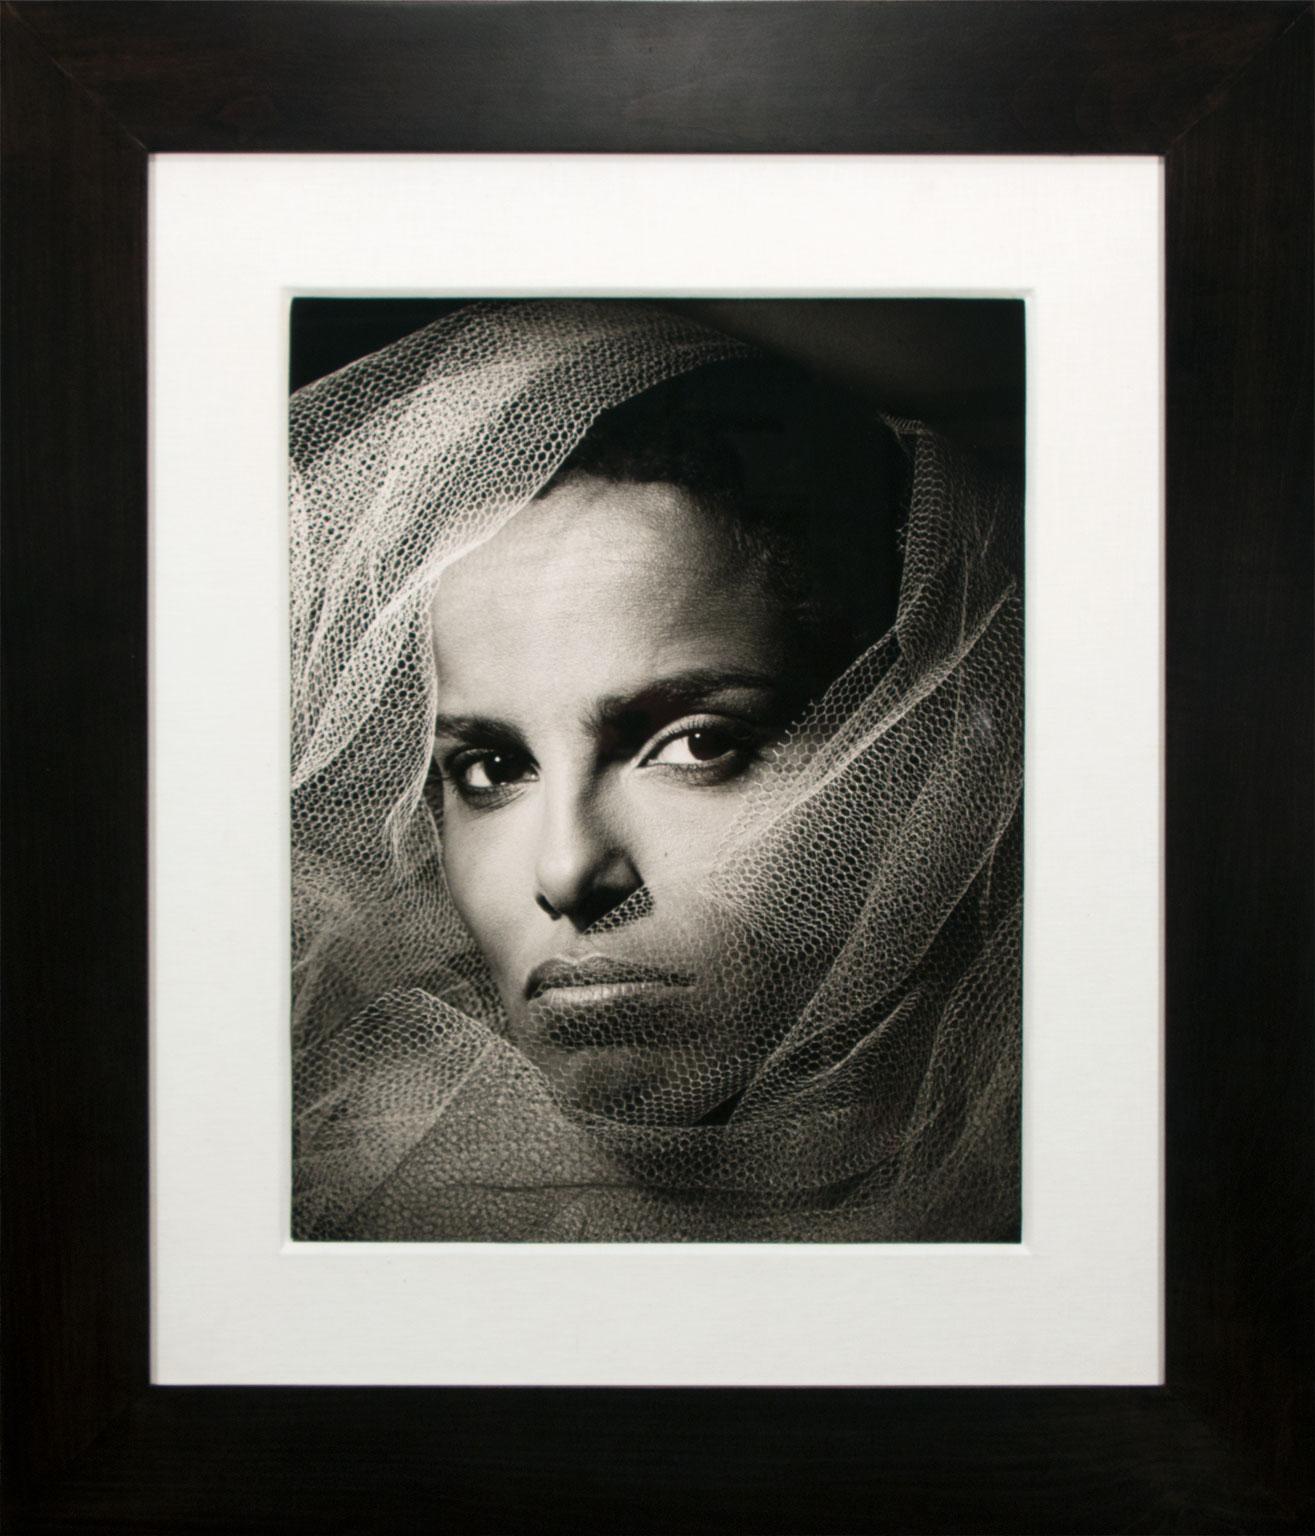 “Shari Belafonte” Ltd Hand-Signed Gelatin Silver Print by Greg Gorman, Framed